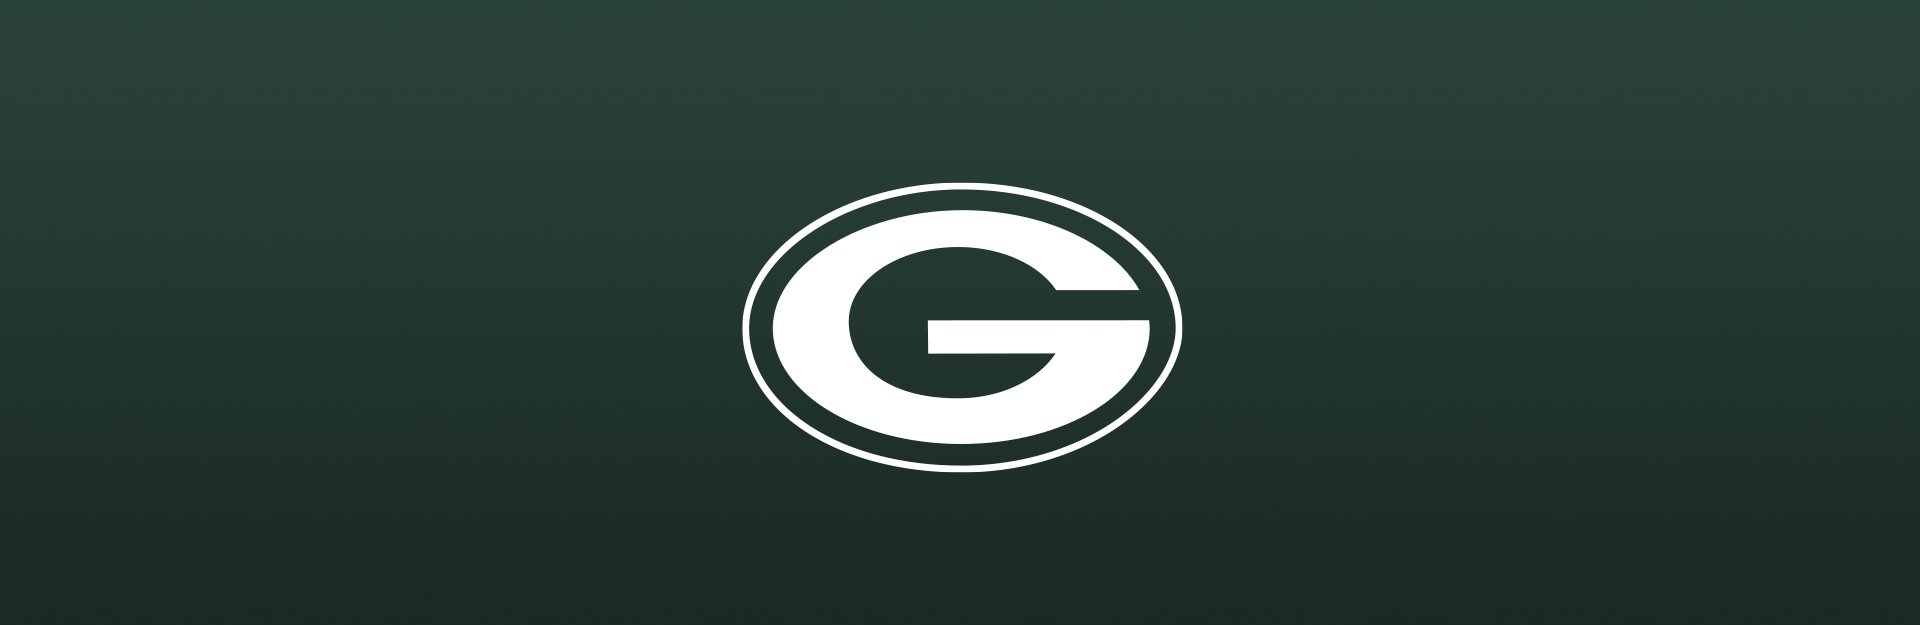 Green Bay Packers logo overlaid on dark green background